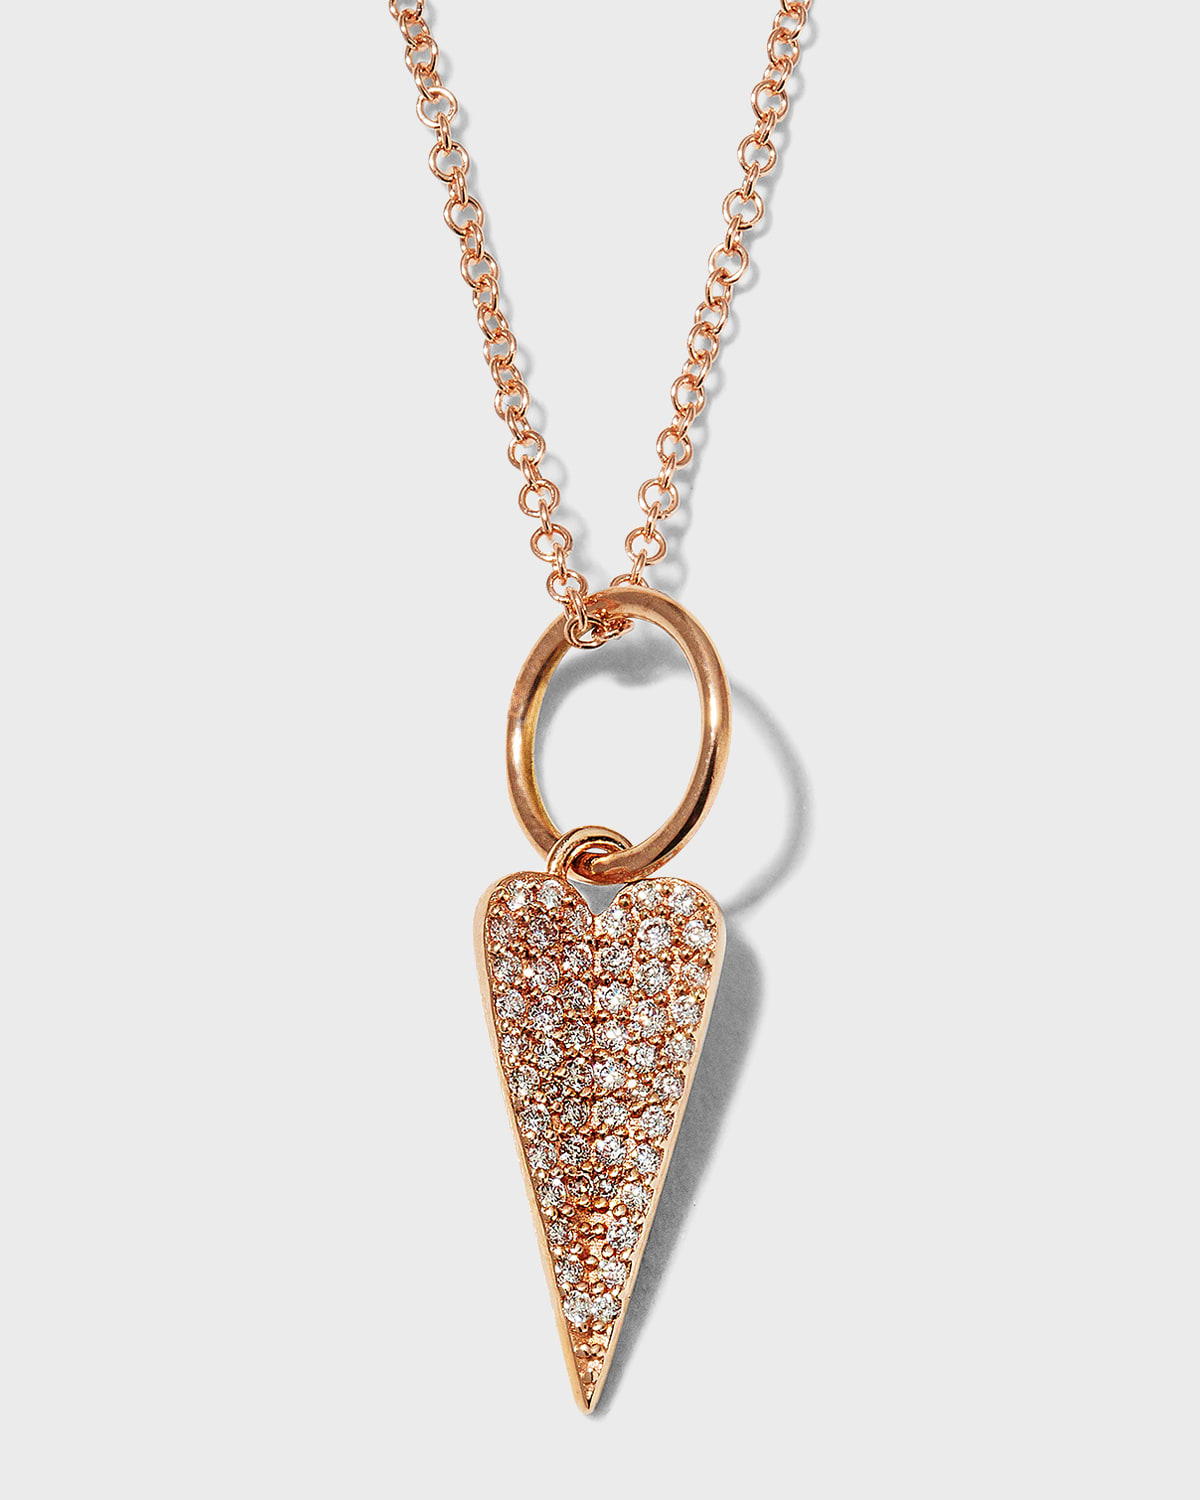 Bridget King Jewelry Mini Folded Heart Necklace